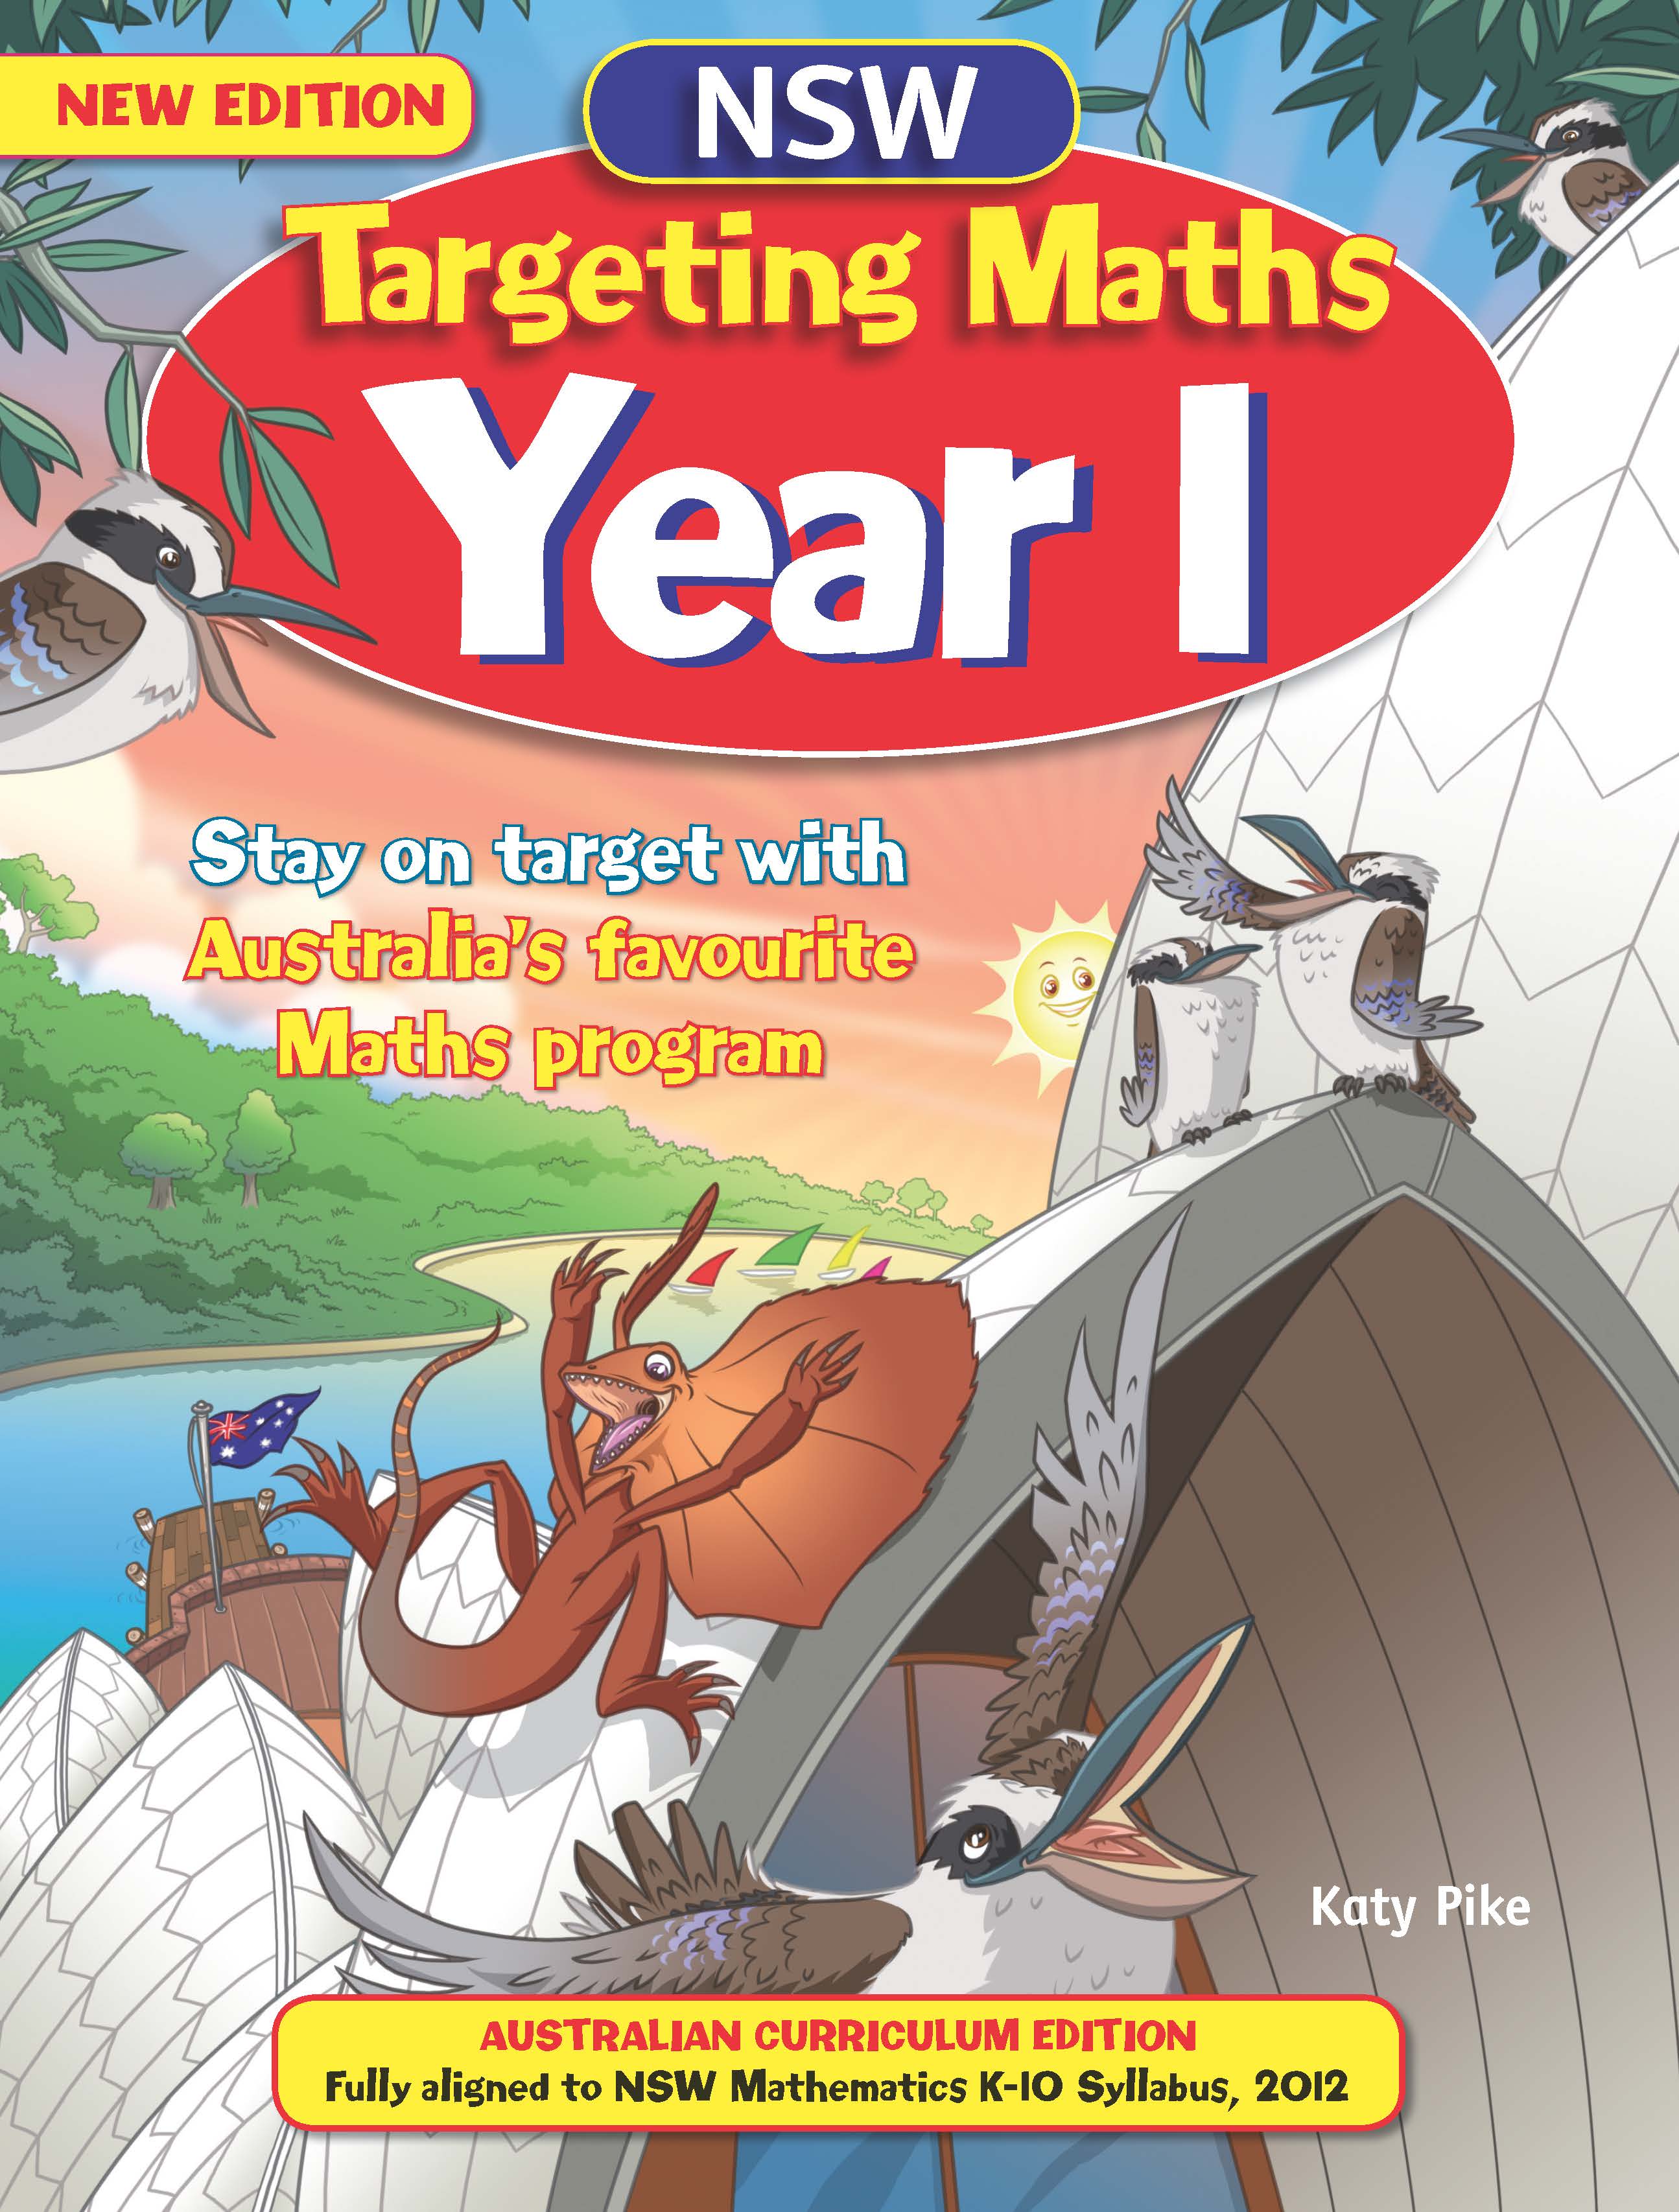 targeting homework activity book year 1